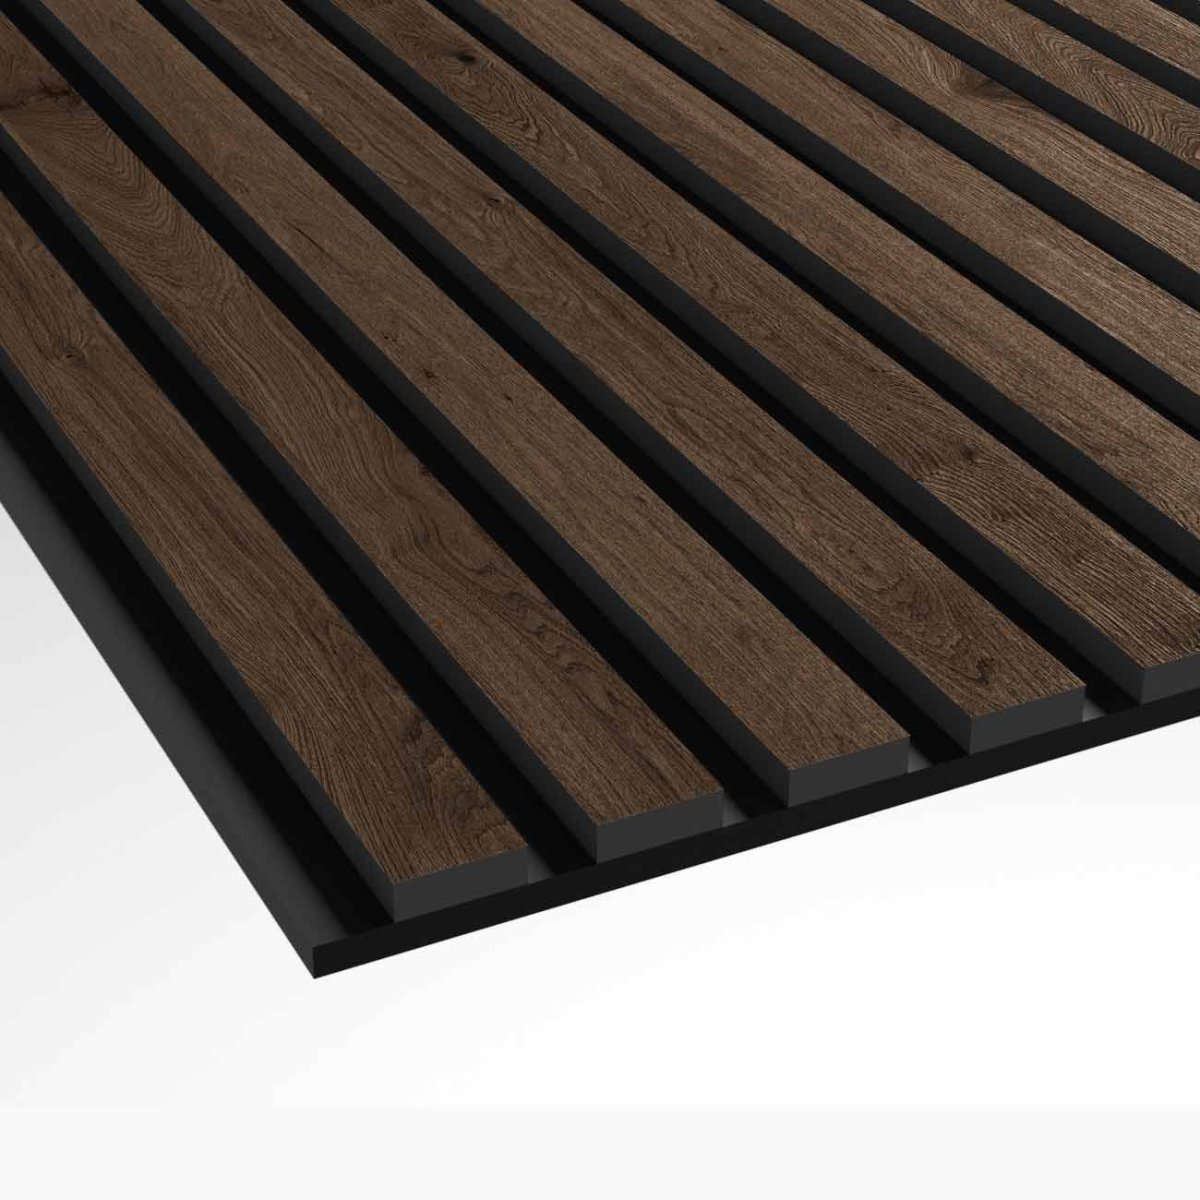 Smoked Oak Acoustic Slats Wall Panel 280 x 60 - DecorMania.eu